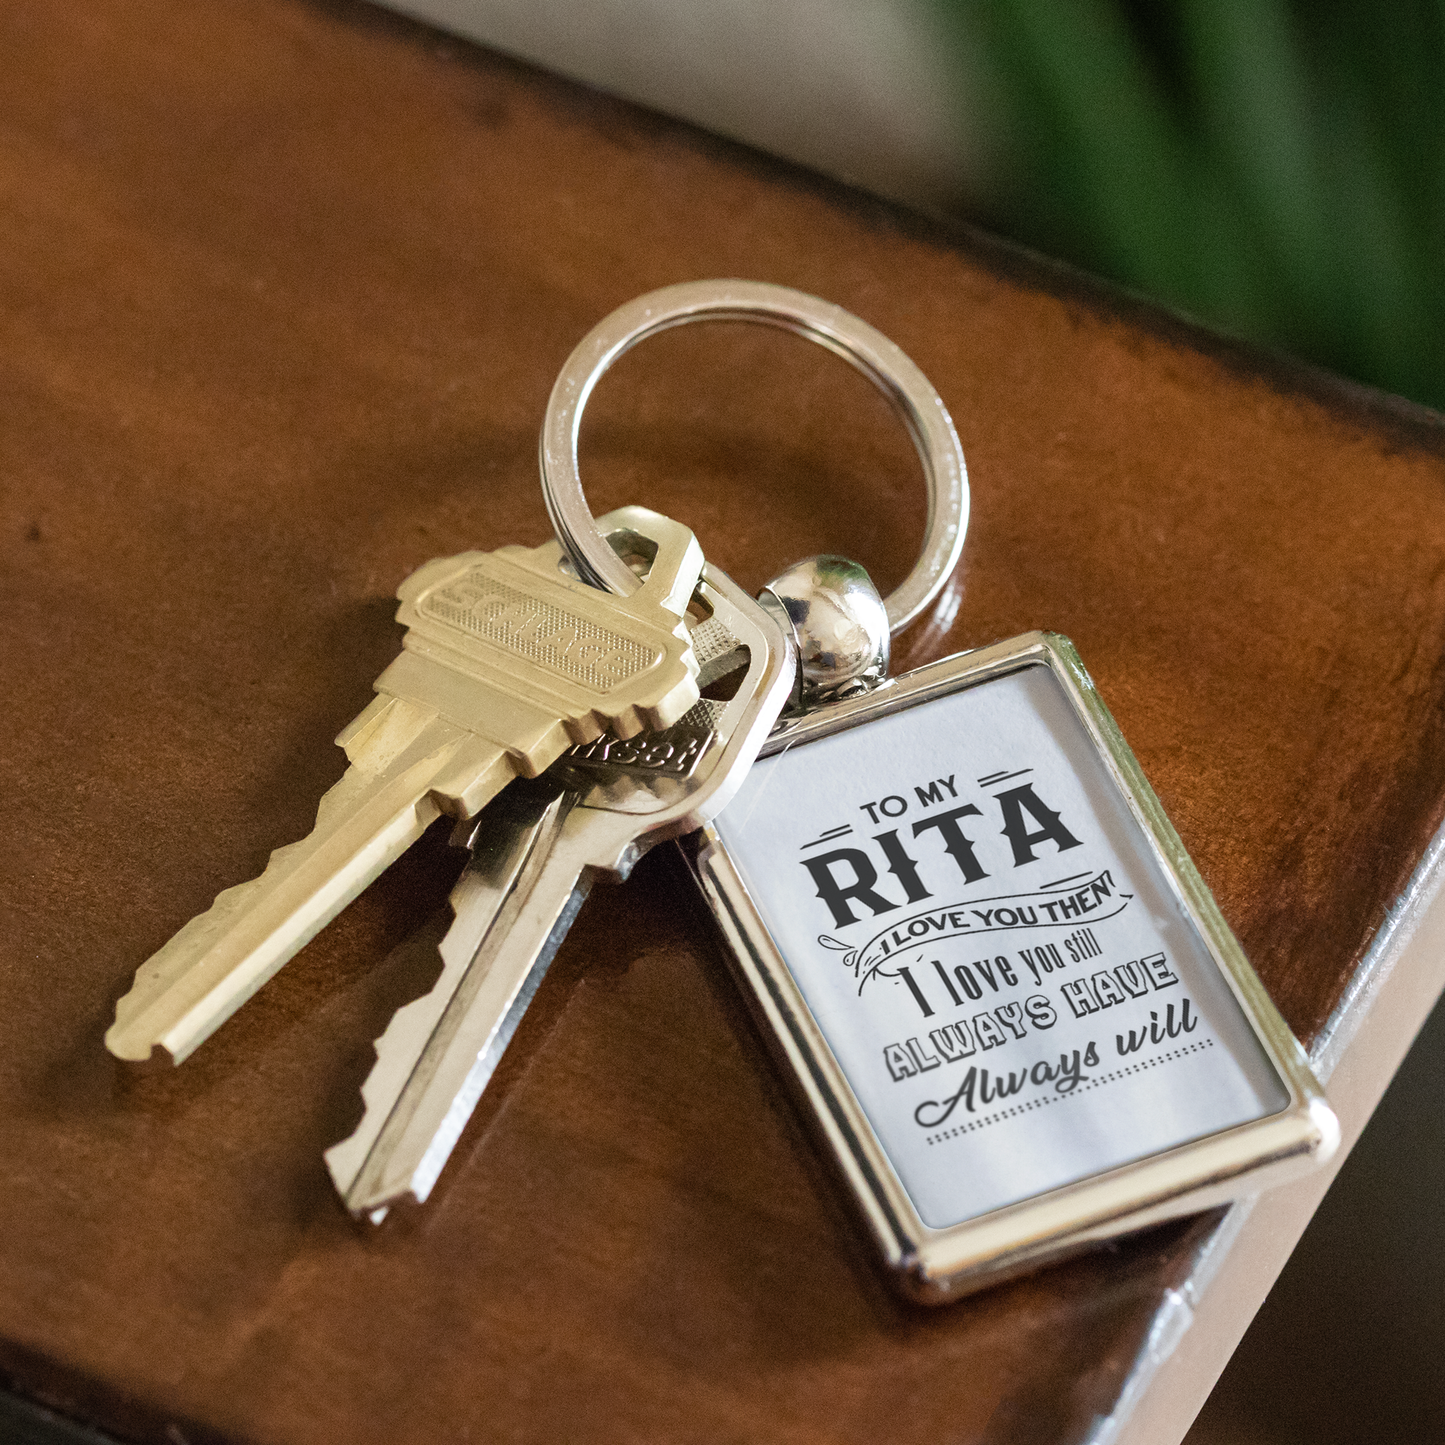 KC-21246372-sp-27436 - [ Rita | 1 | 1 ] (TL_Keychain) Keychain For Boyfriend With Name Rita - To My Rita I Love Yo